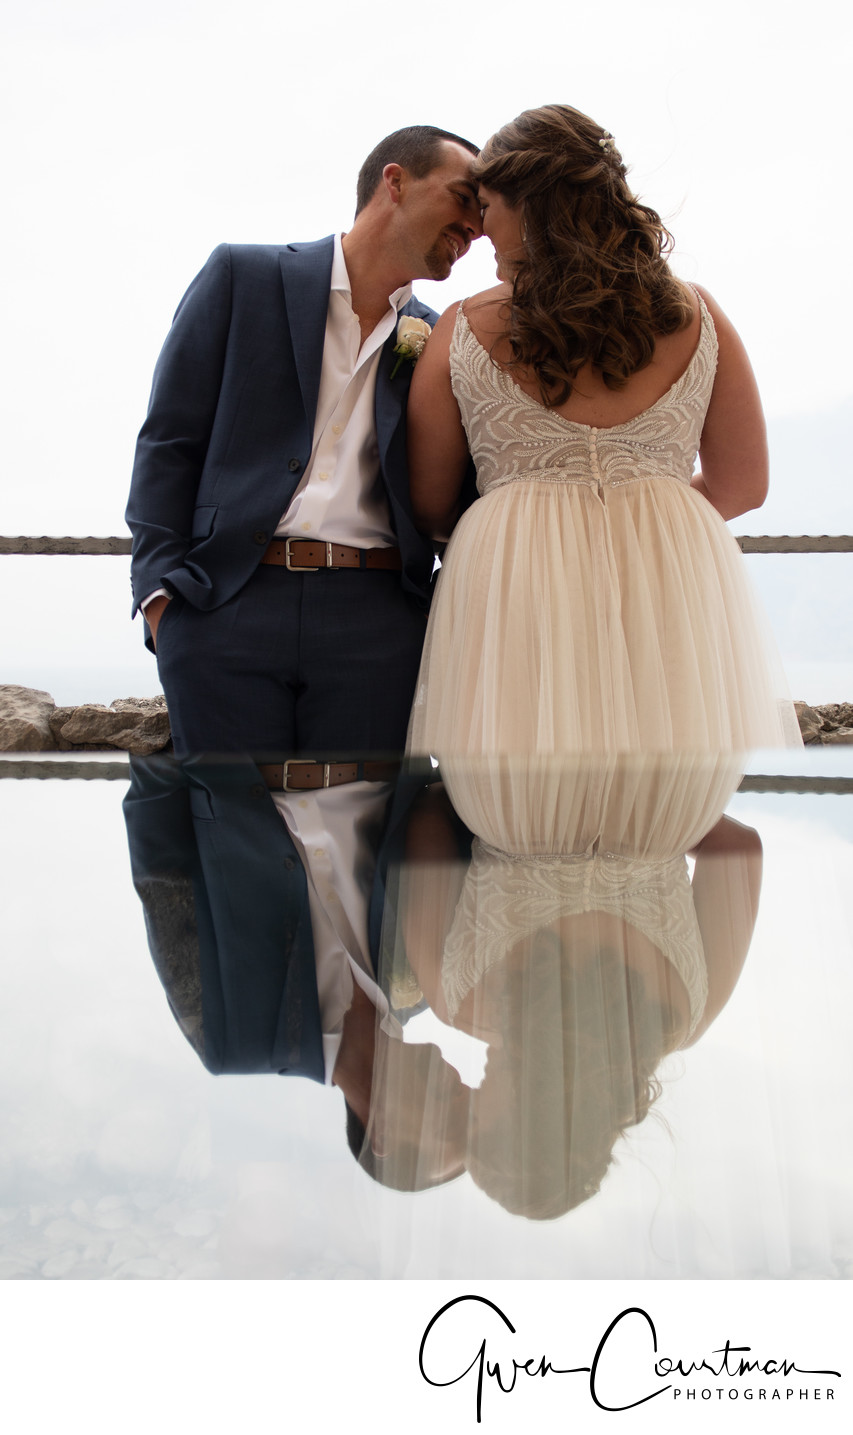 Justin and Kirsten, Malcesine ceremony, Lake Garda,